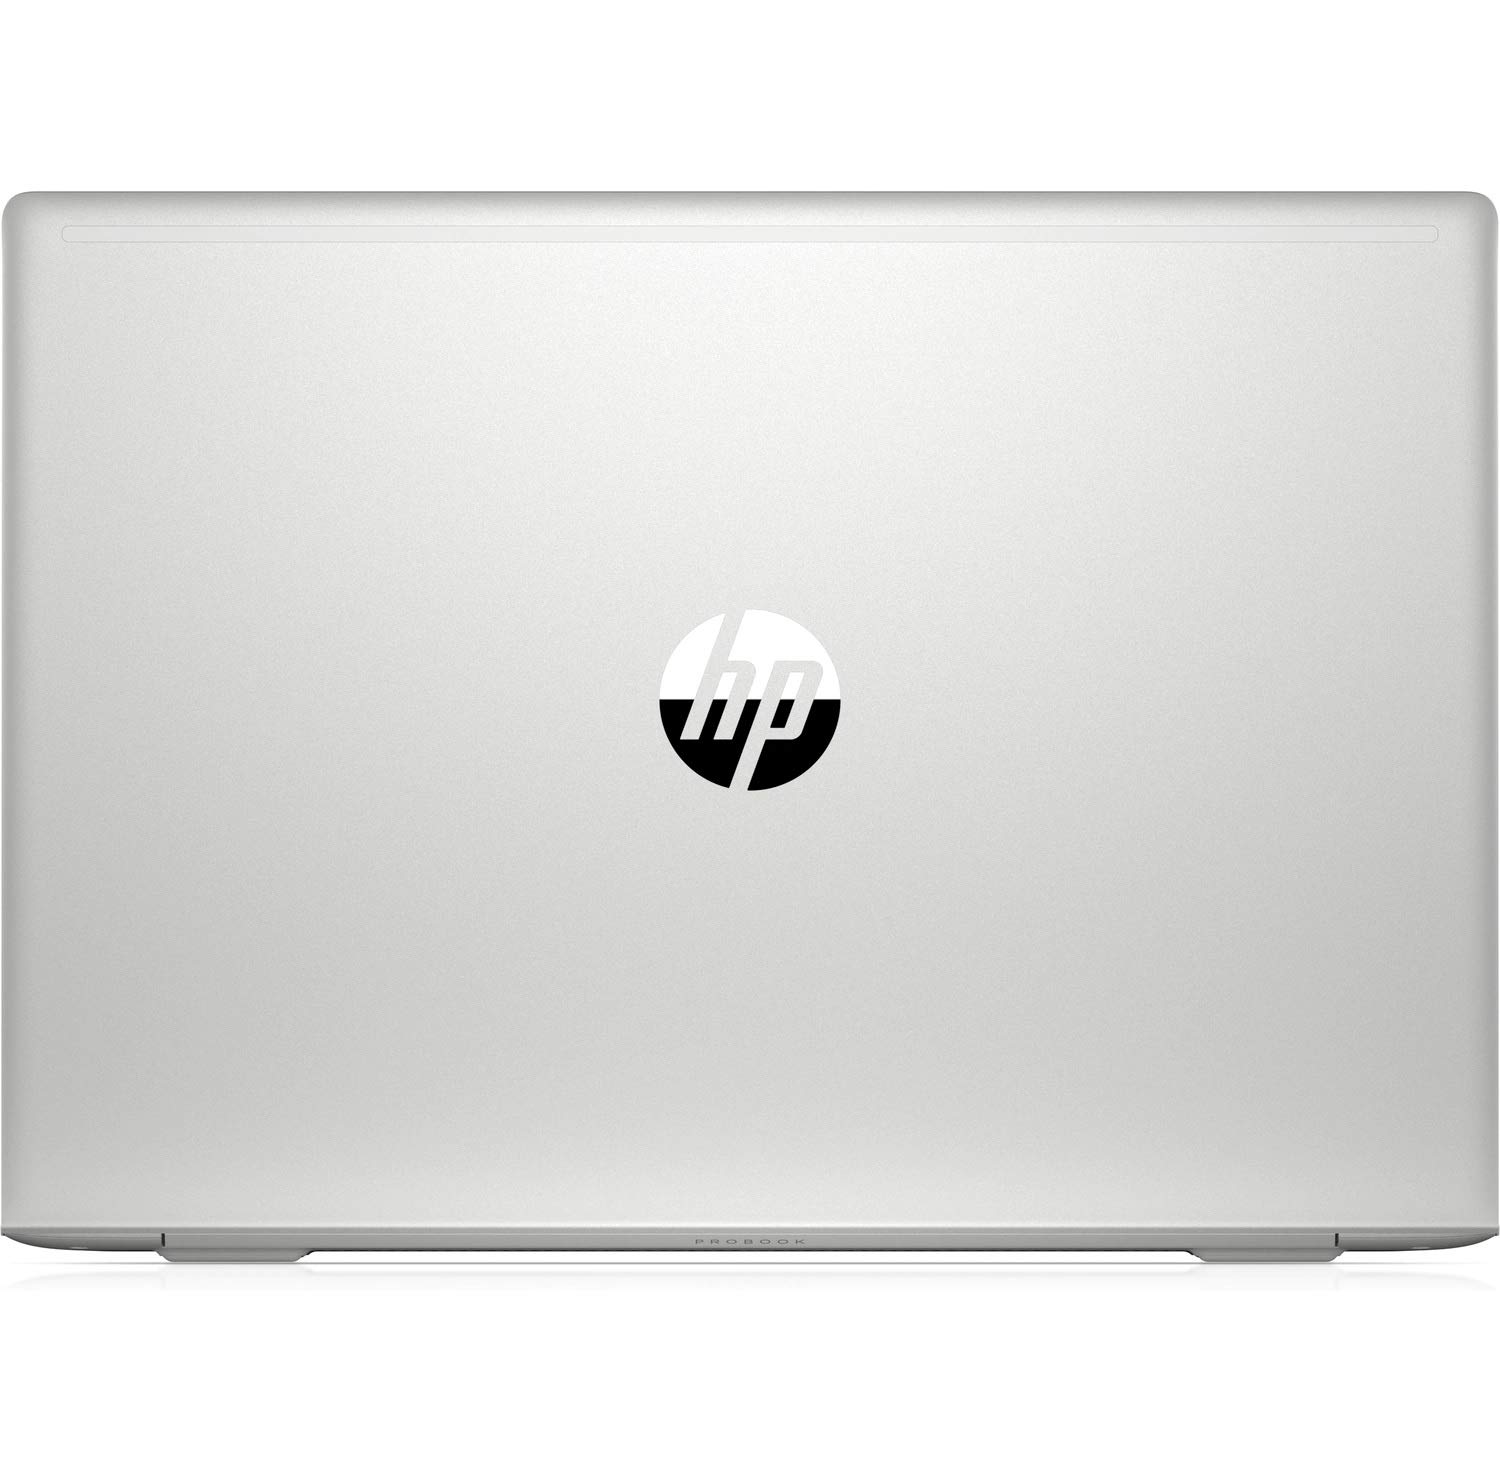 HP ProBook 450 Laptop, 15-15.99 inches (8WB97UT#ABA)